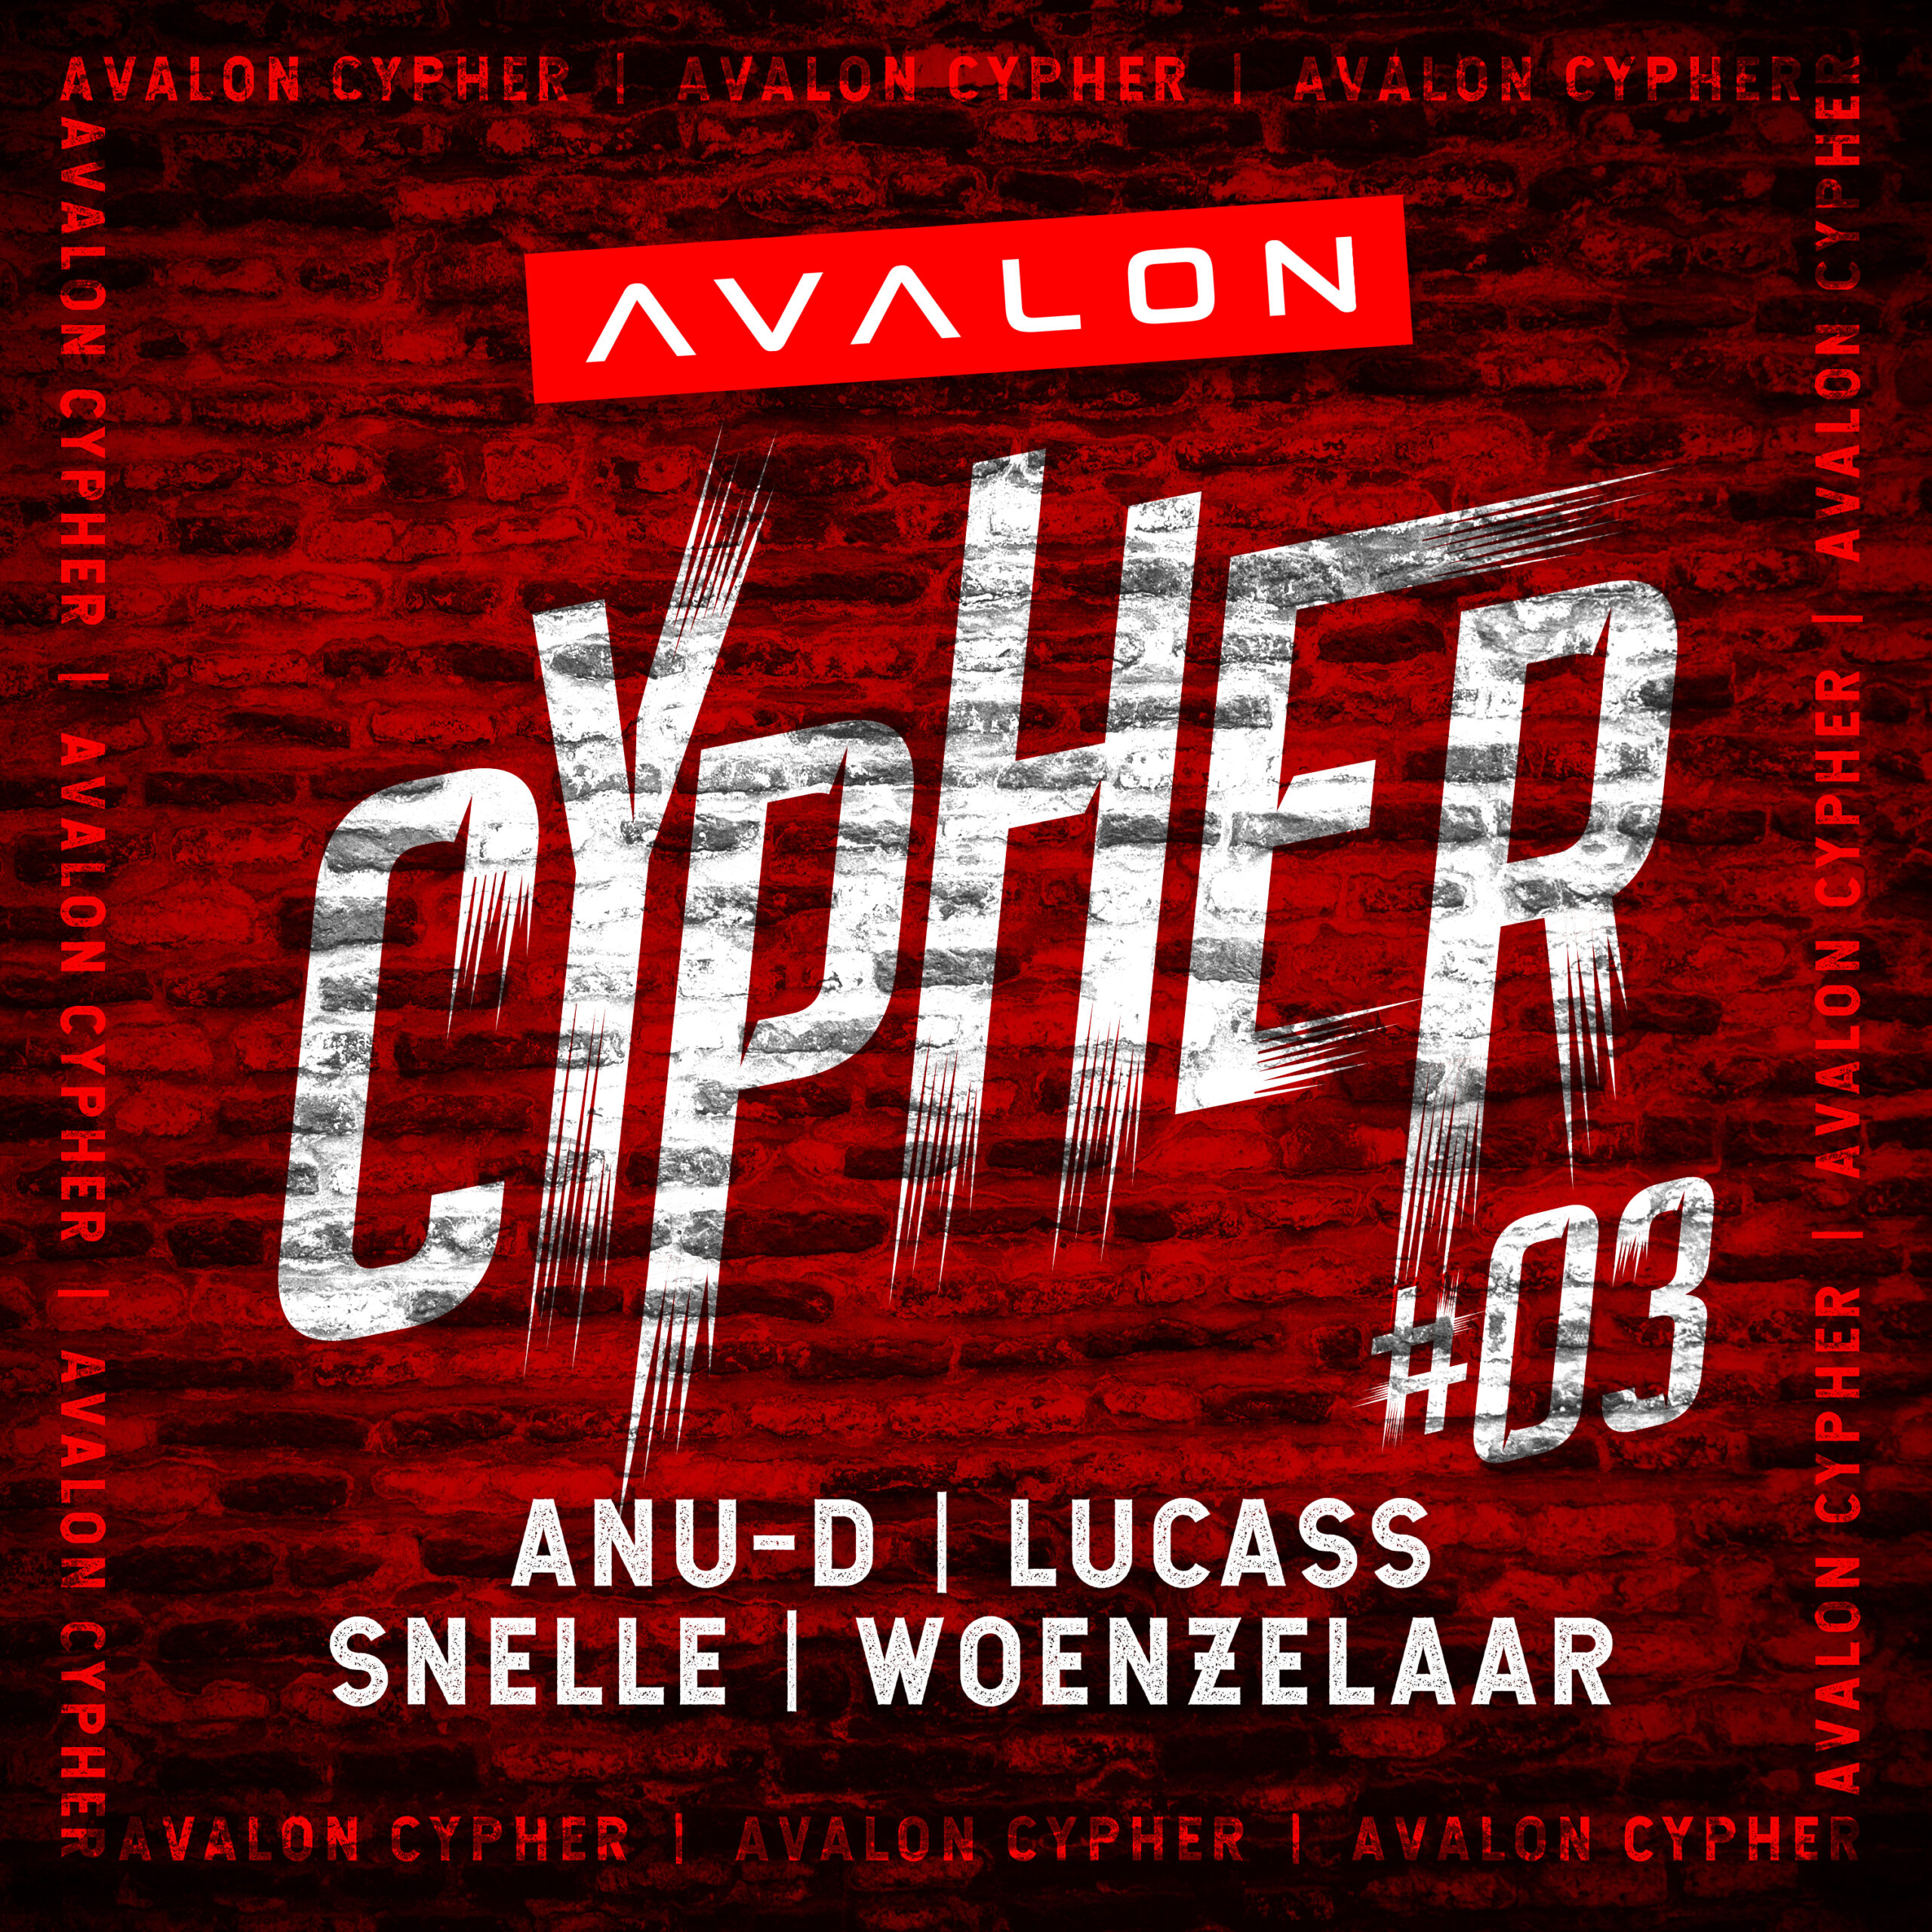 Videoclip ‘Avalon Cypher – #3’ NU online!